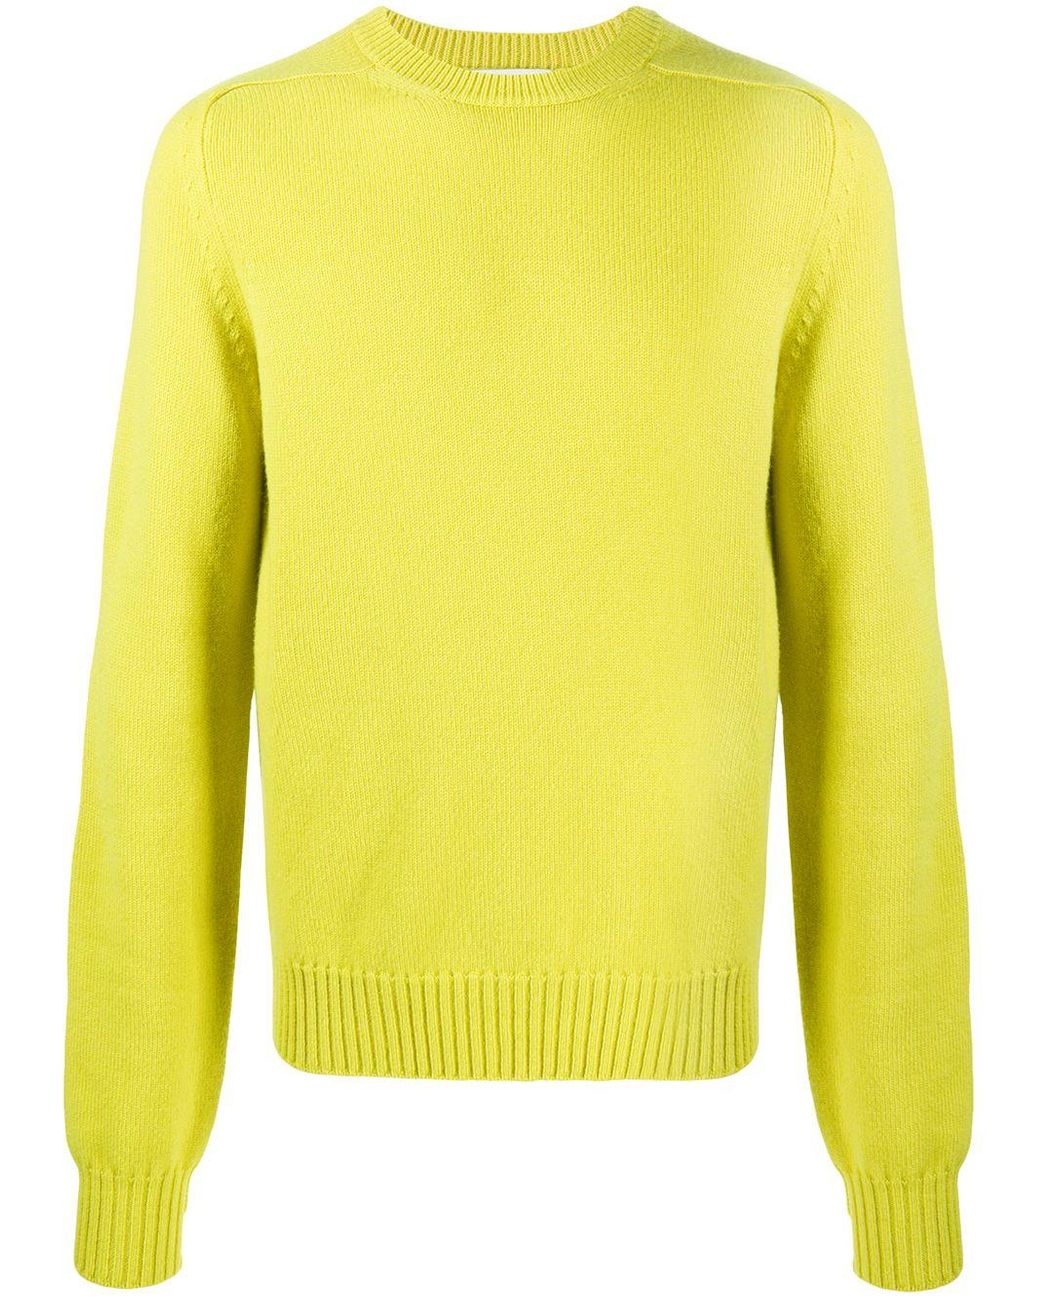 Bottega Veneta Wool Crew Neck Sweater in Green for Men - Lyst